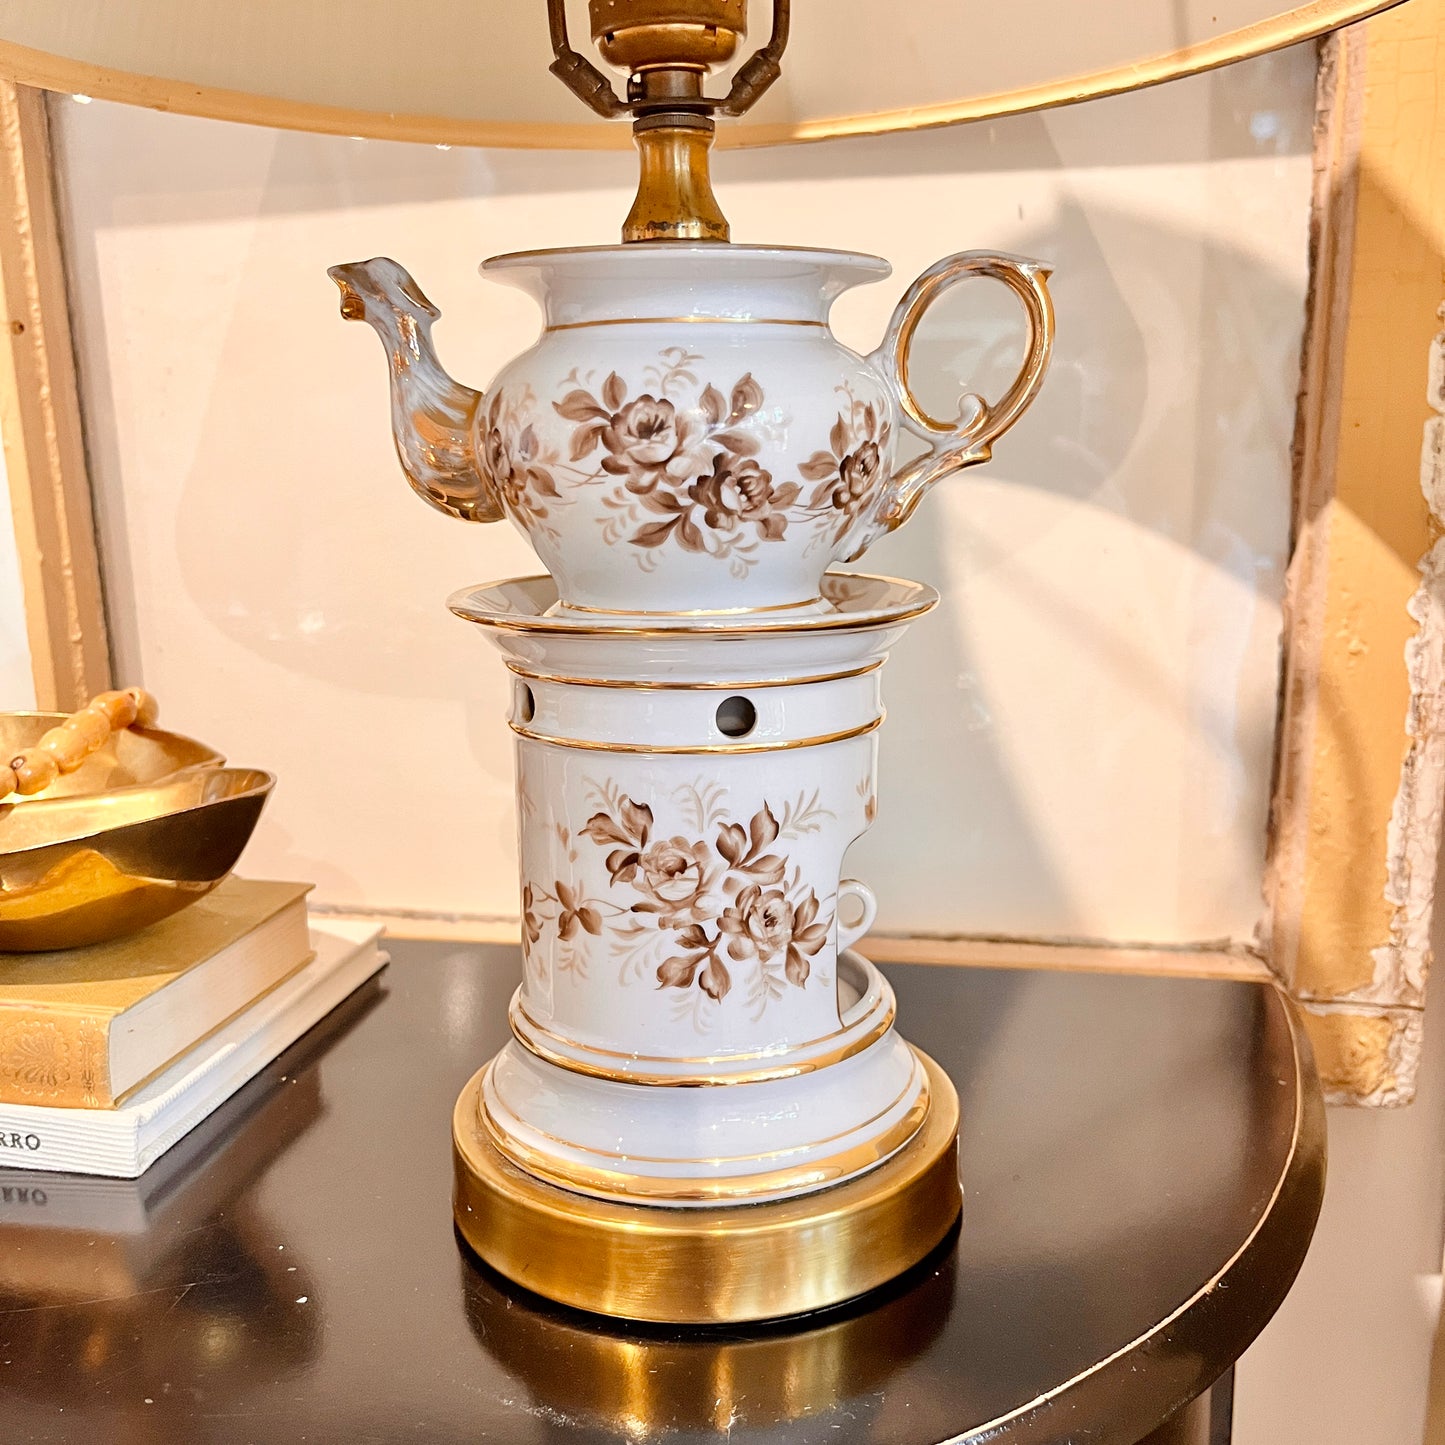 Tea lamp